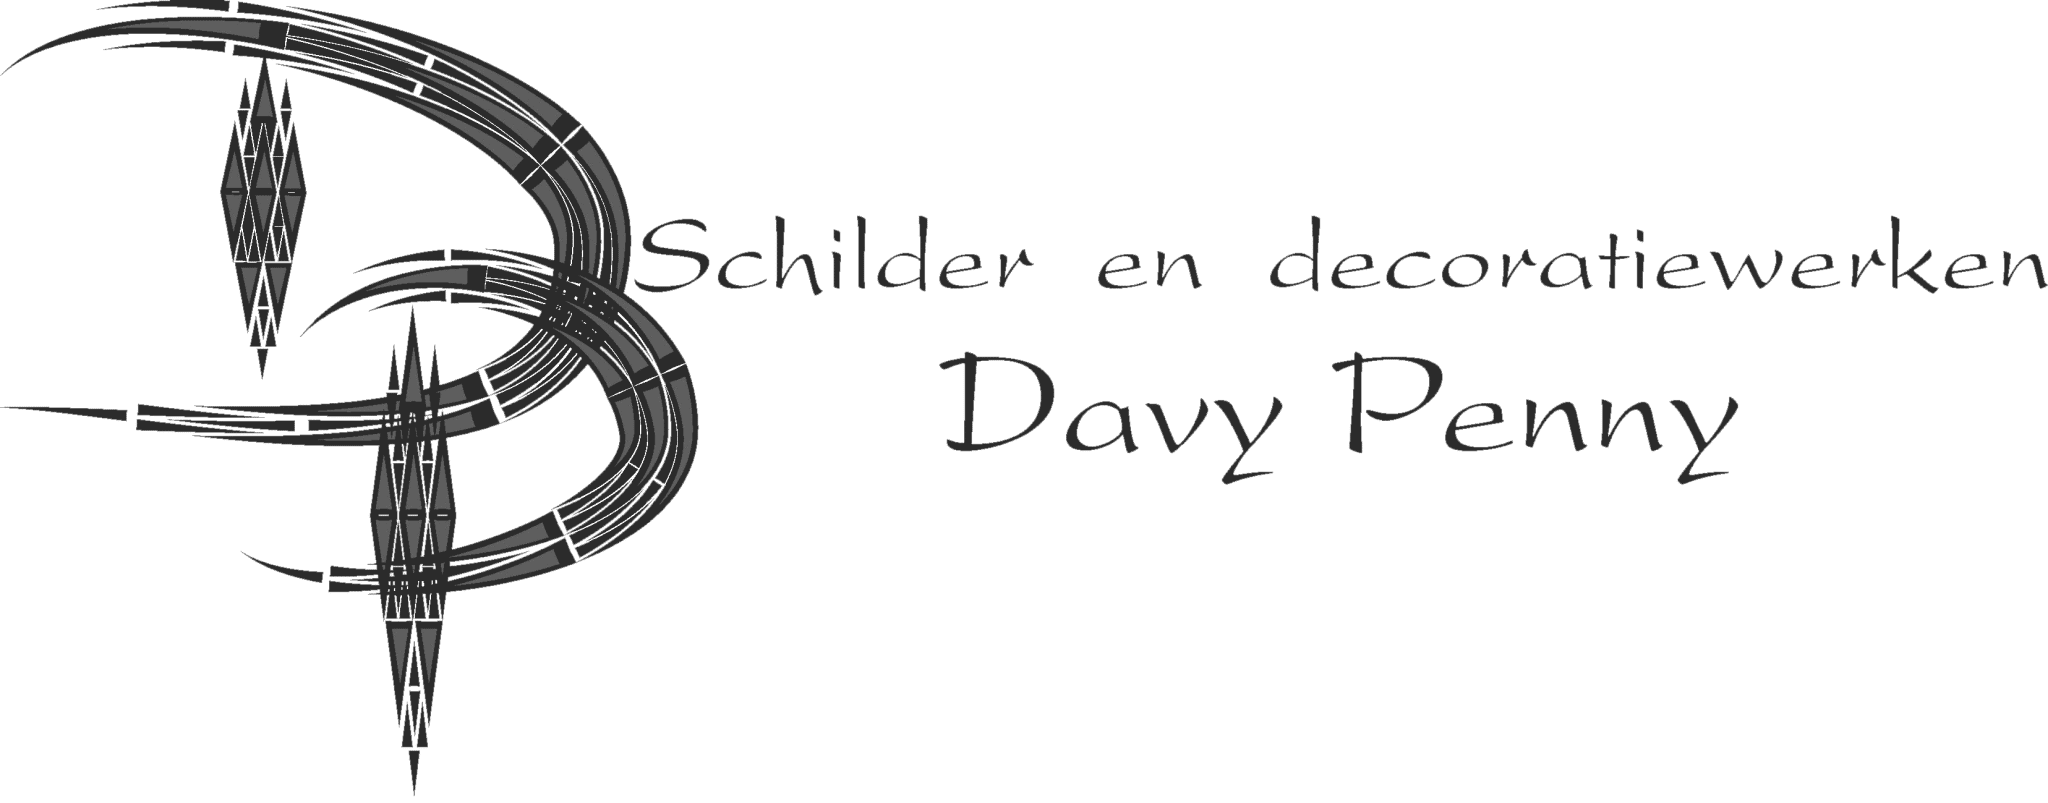 Davy Penny